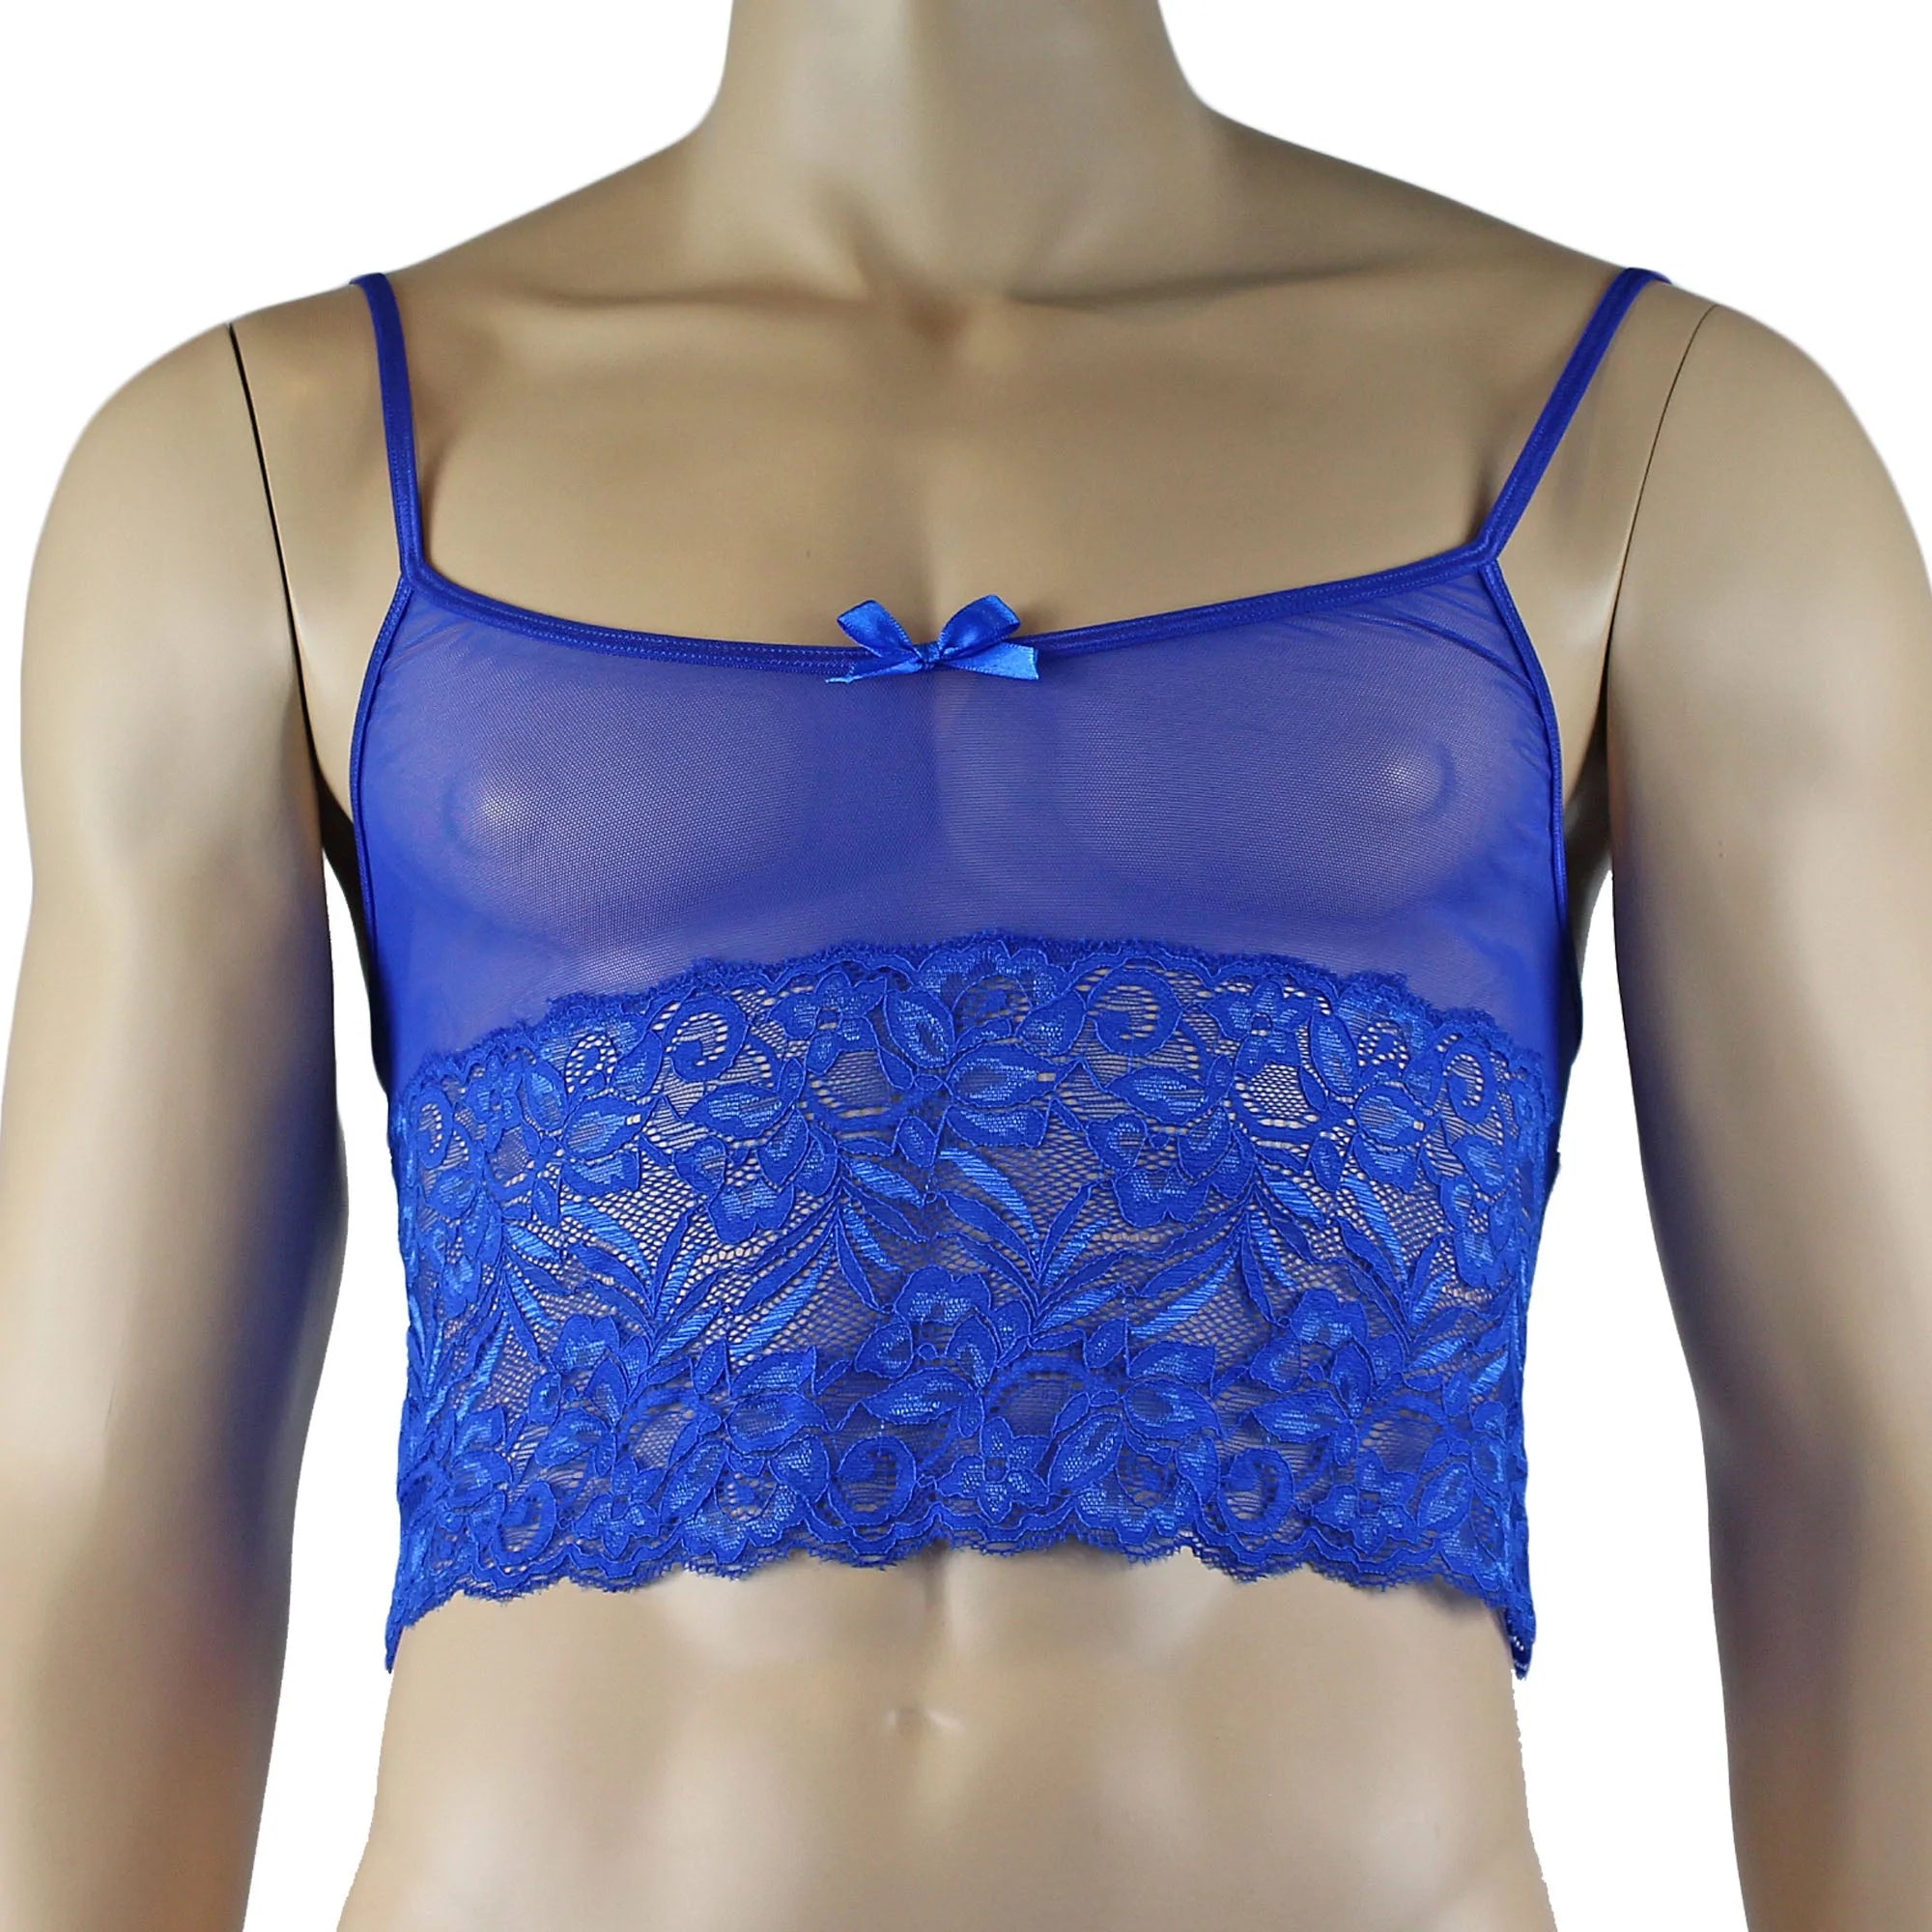 SALE - Mens Kristy Sexy Lace Camisole Top Male Lingerie Blue